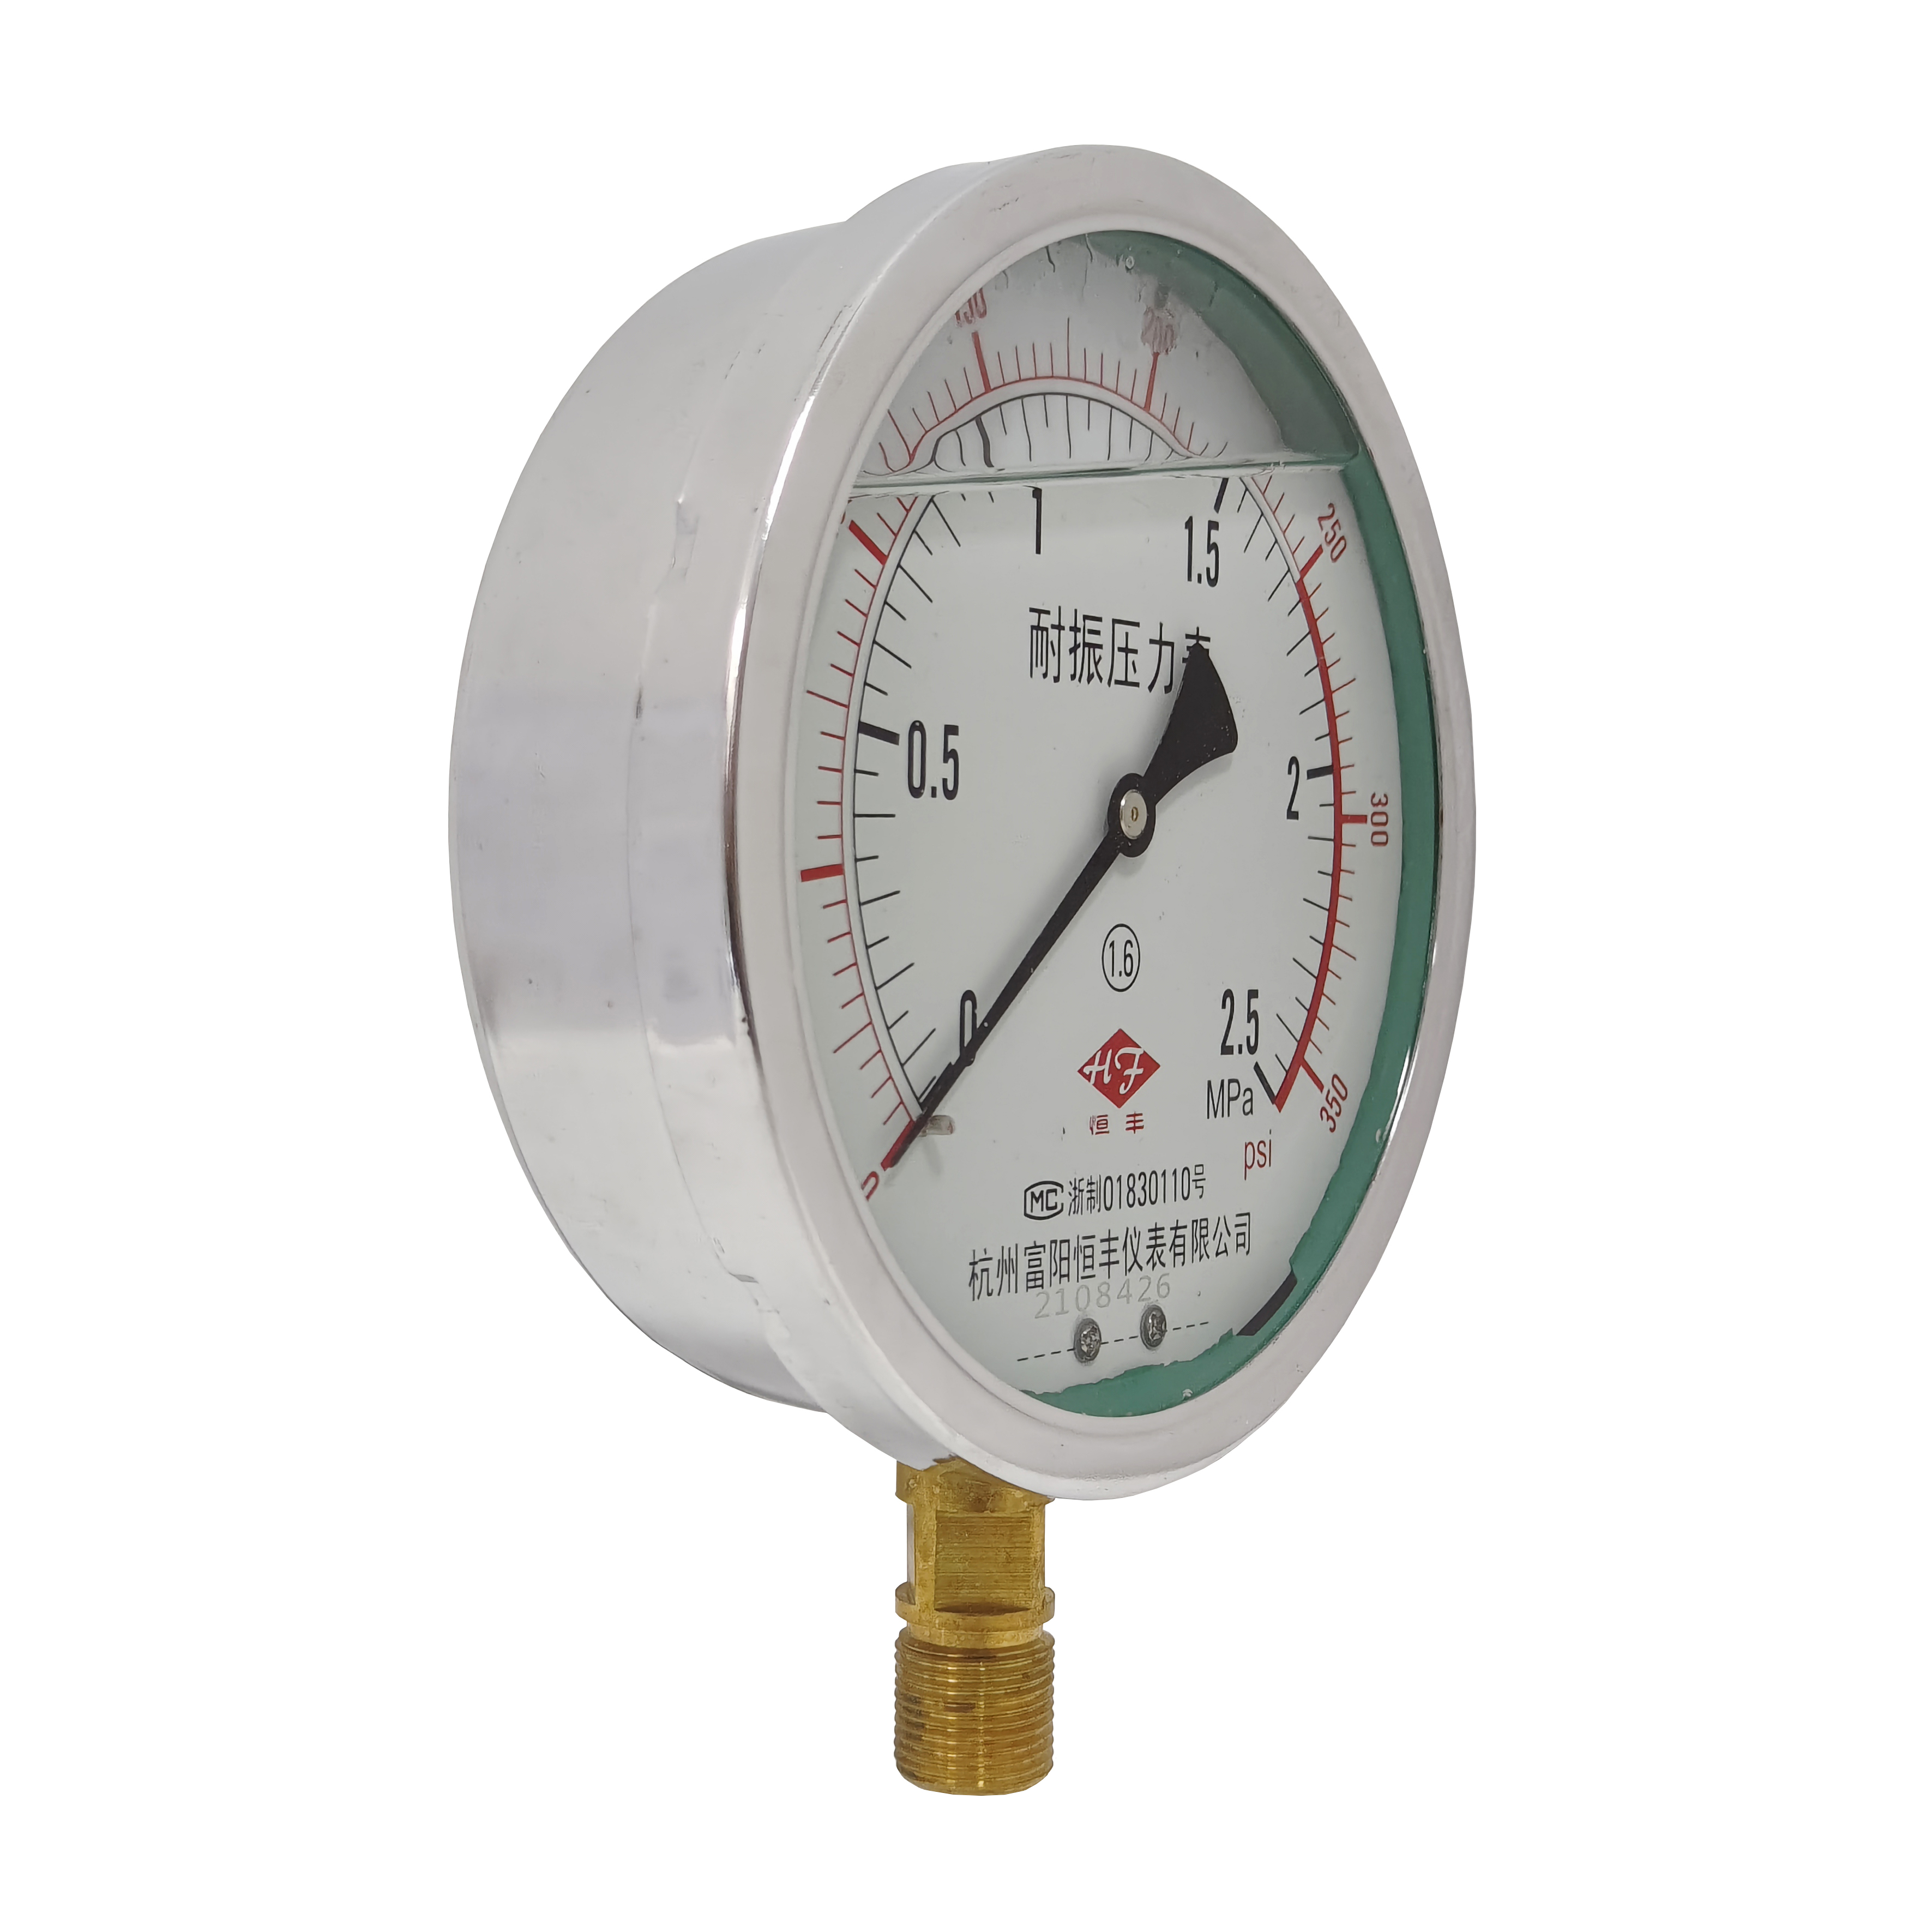 YN150 shock-proof pressure gauge